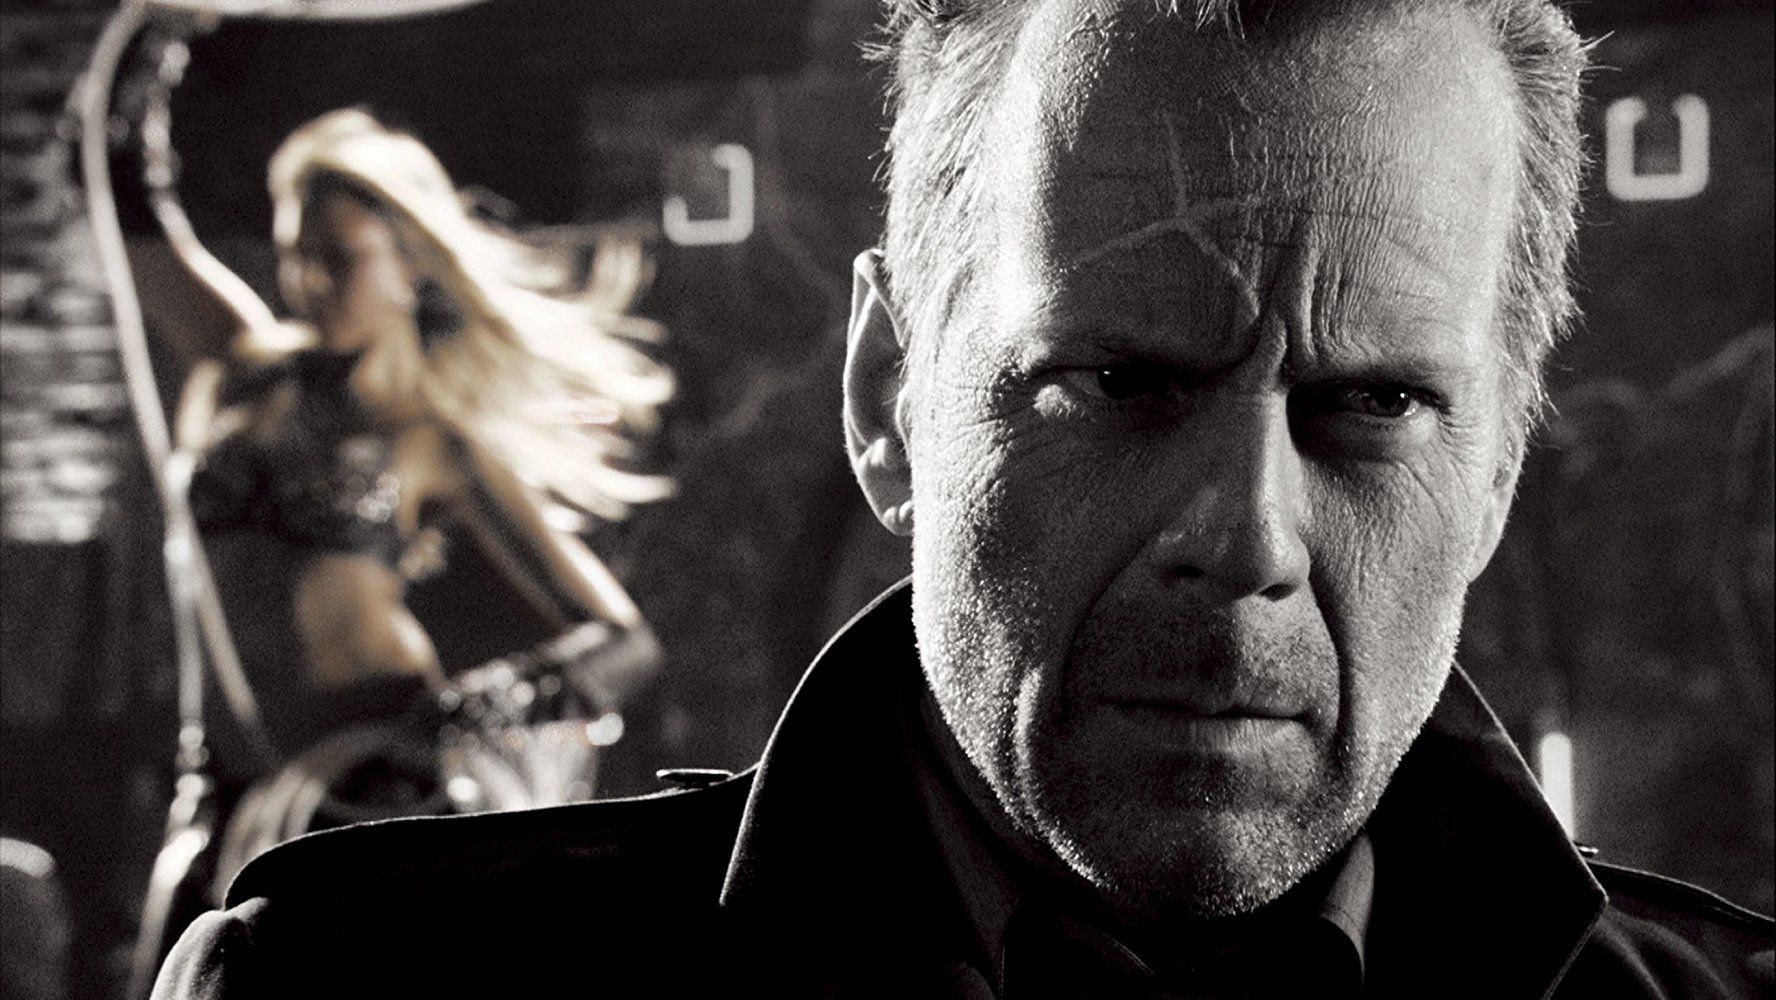 Bruce Willis as Detective John Hartigan in Sin City (2005)